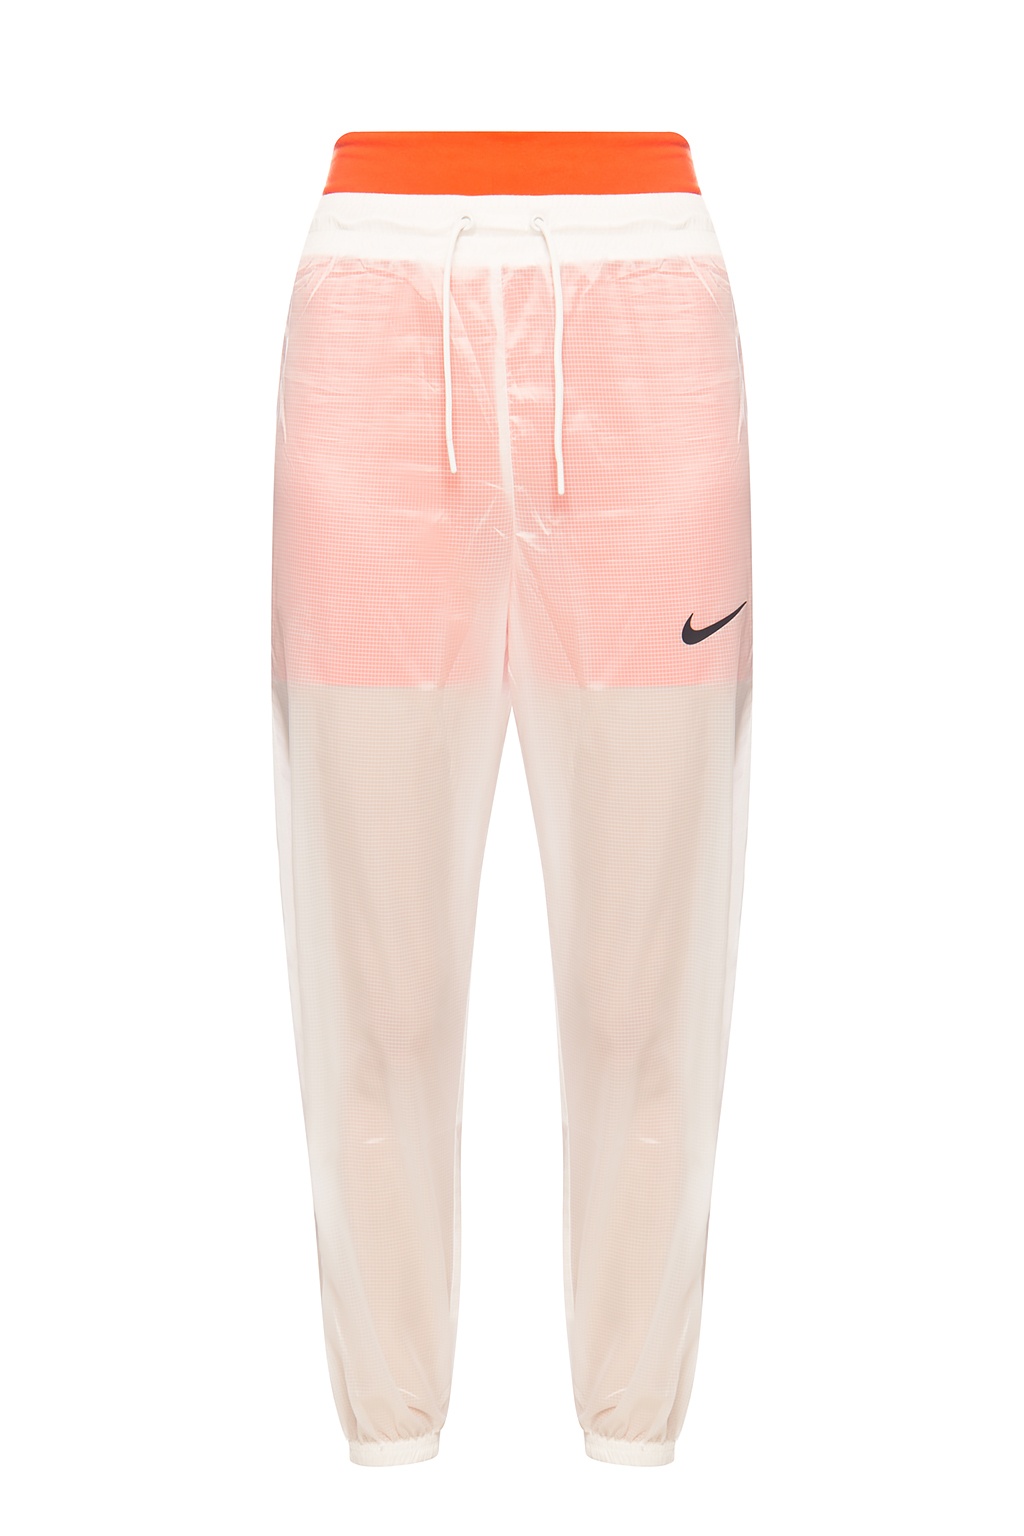 Sweatpants with logo Nike - Vitkac 